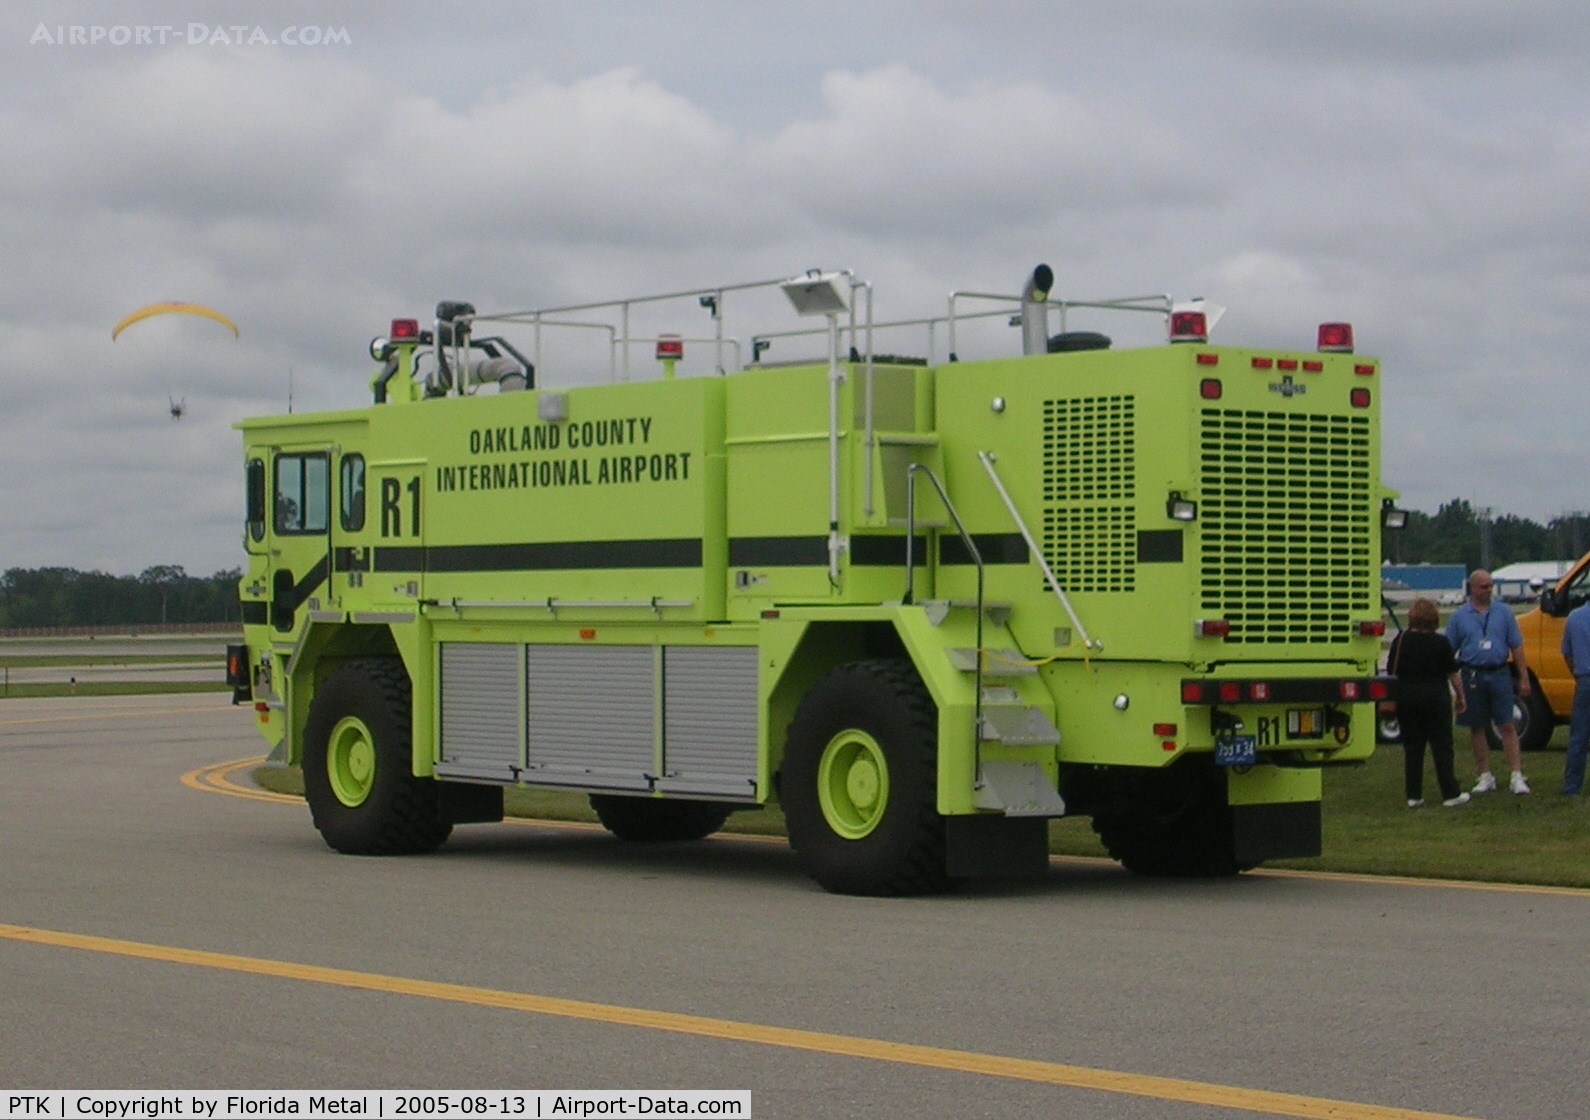 Oakland County International Airport (PTK) - Fire truck at PTK